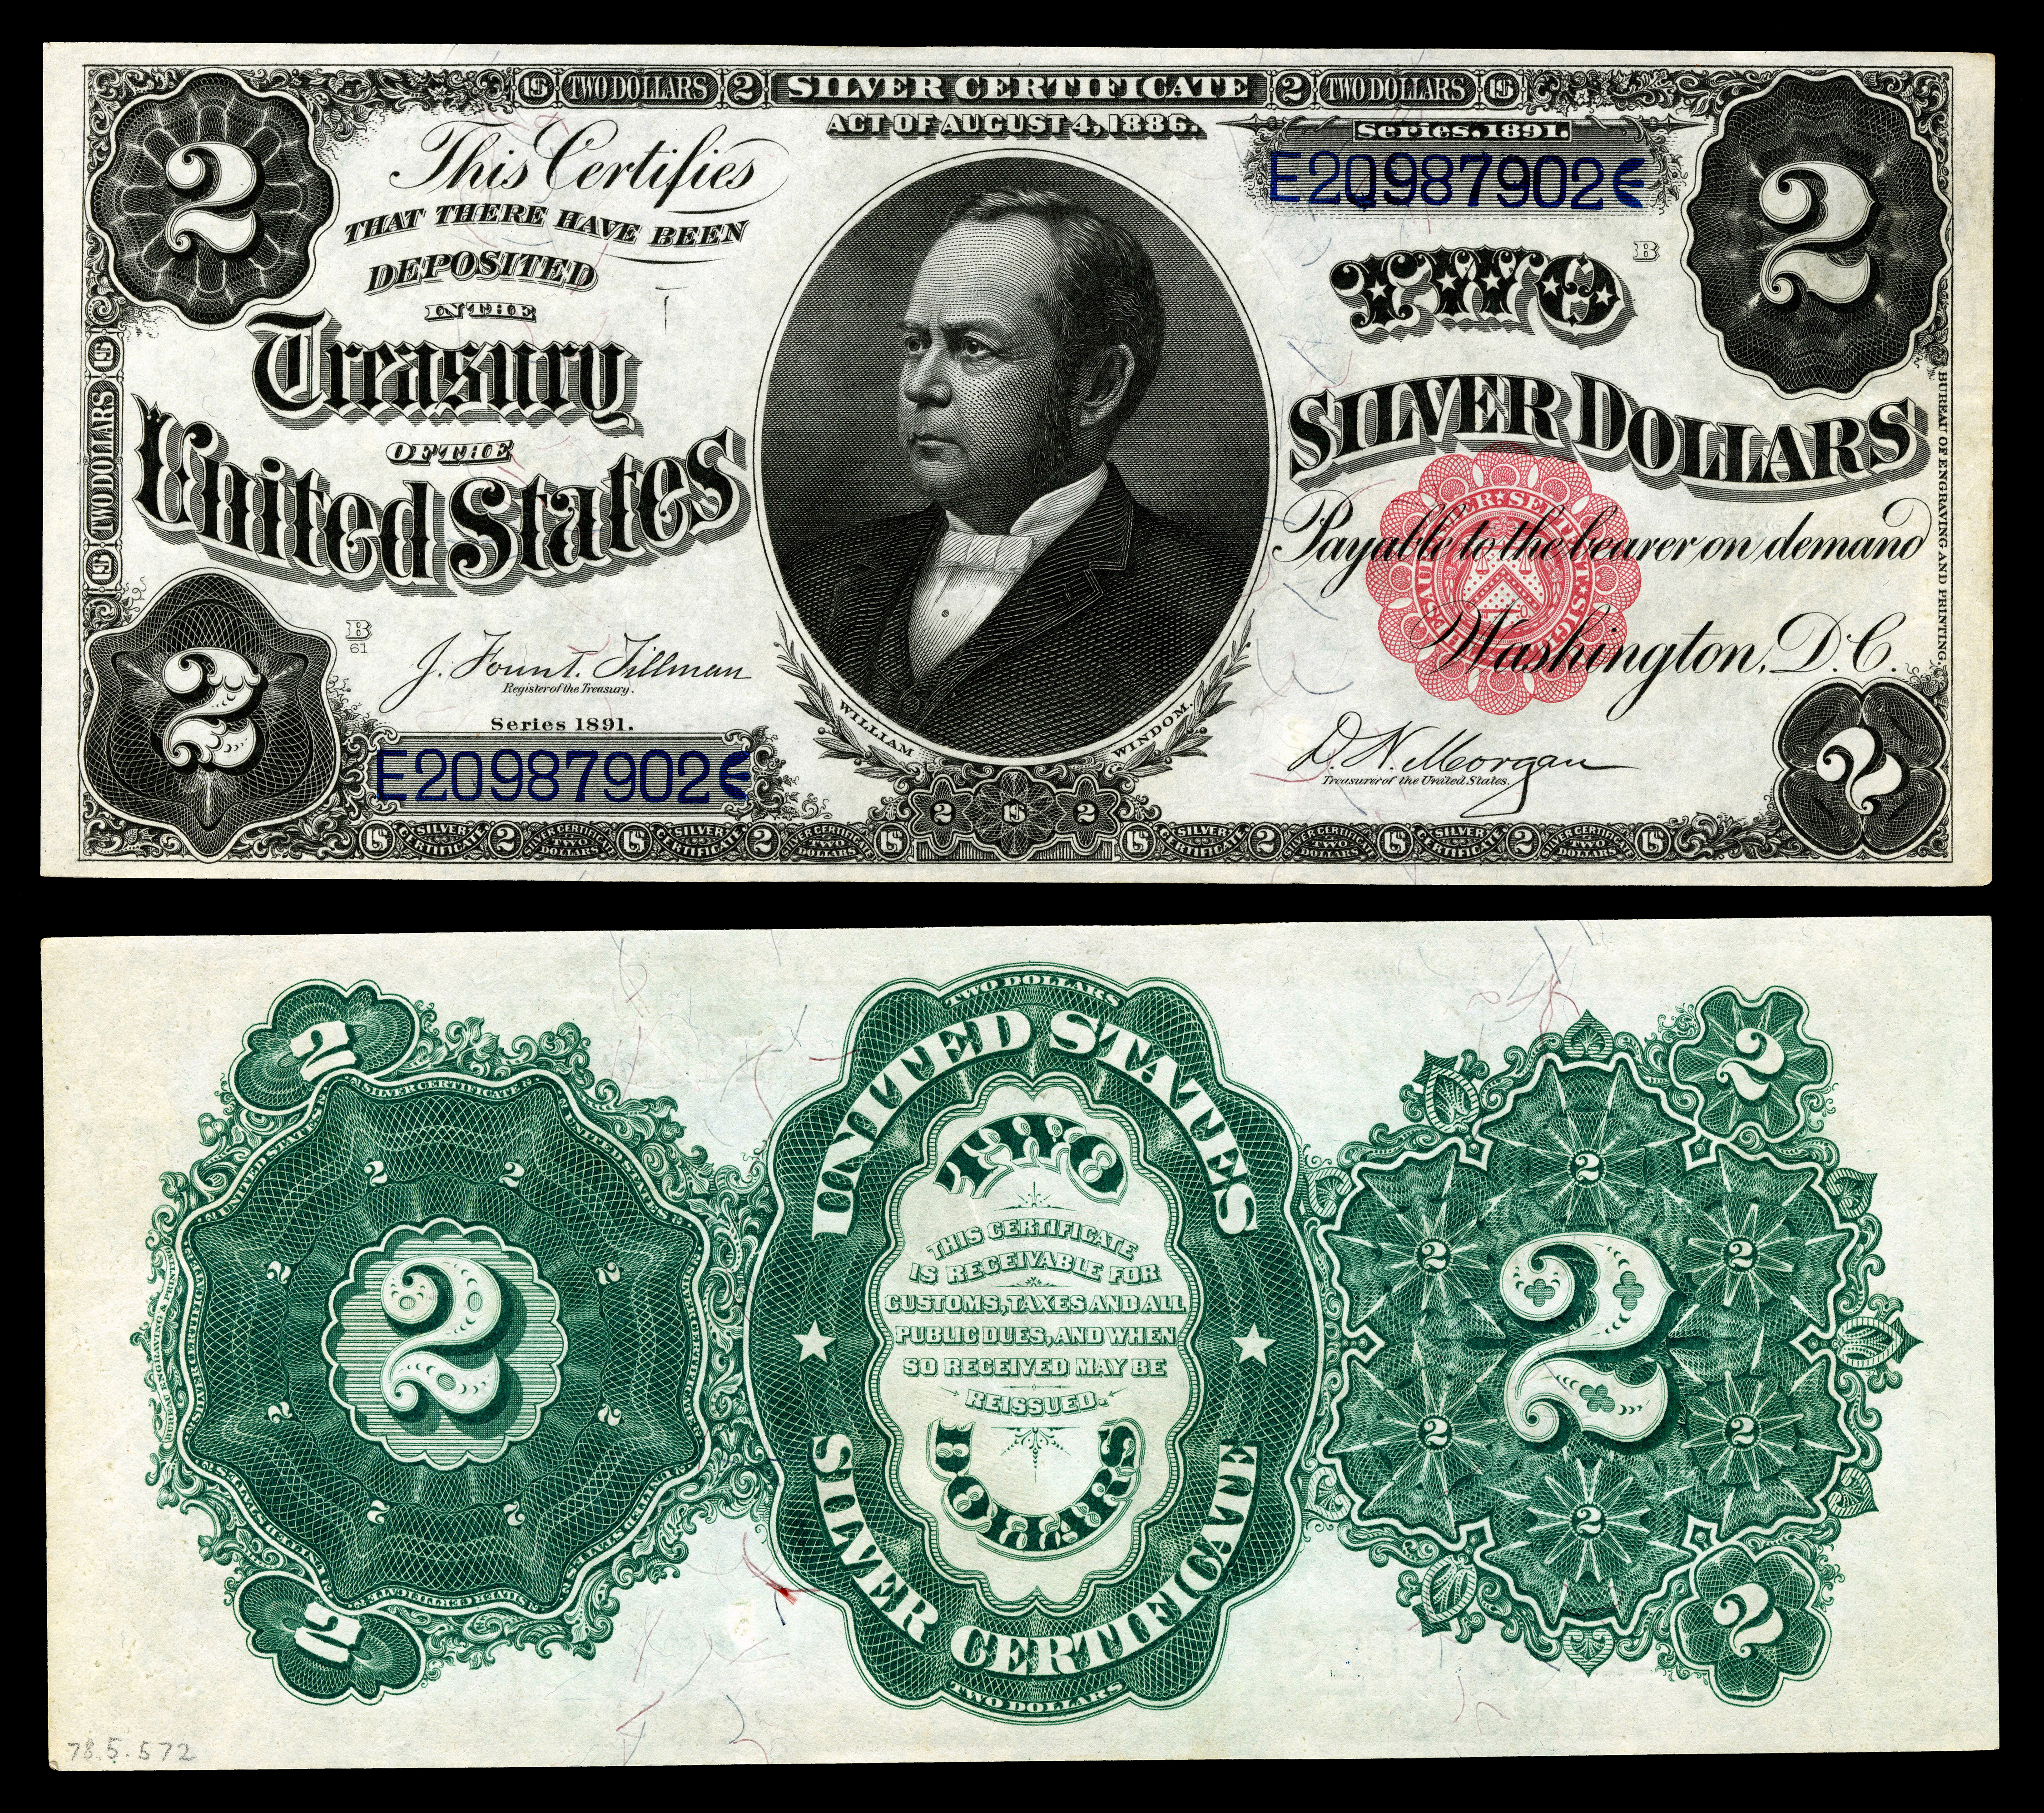 United States one-dollar bill - Wikipedia